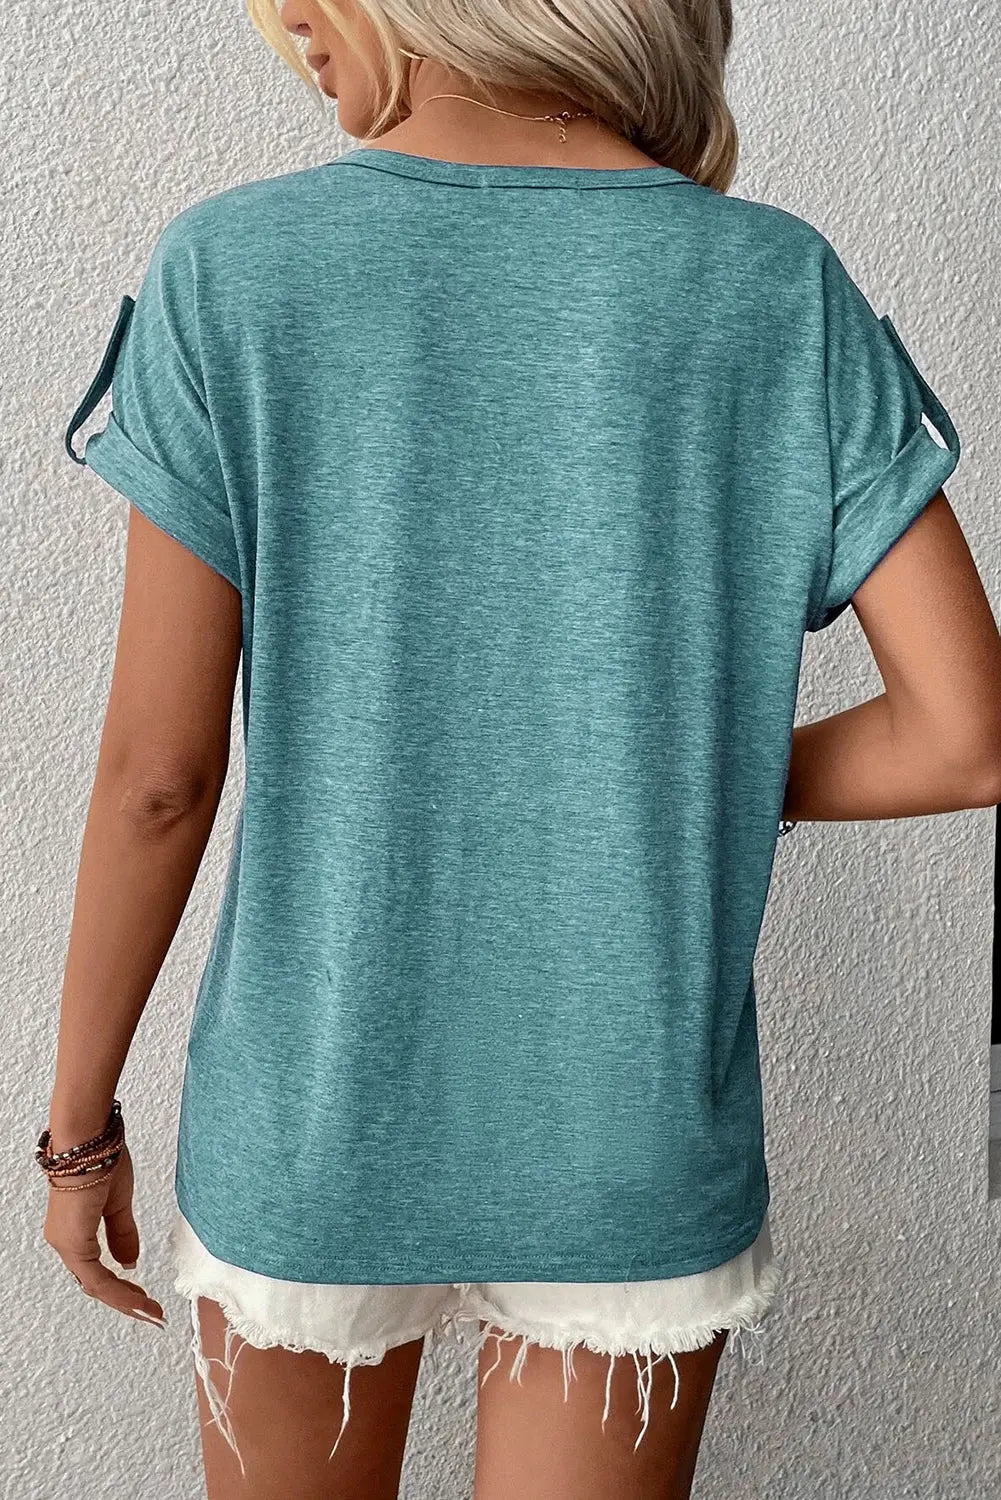 Sky blue v-neck rolled short sleeve henley top - t-shirts